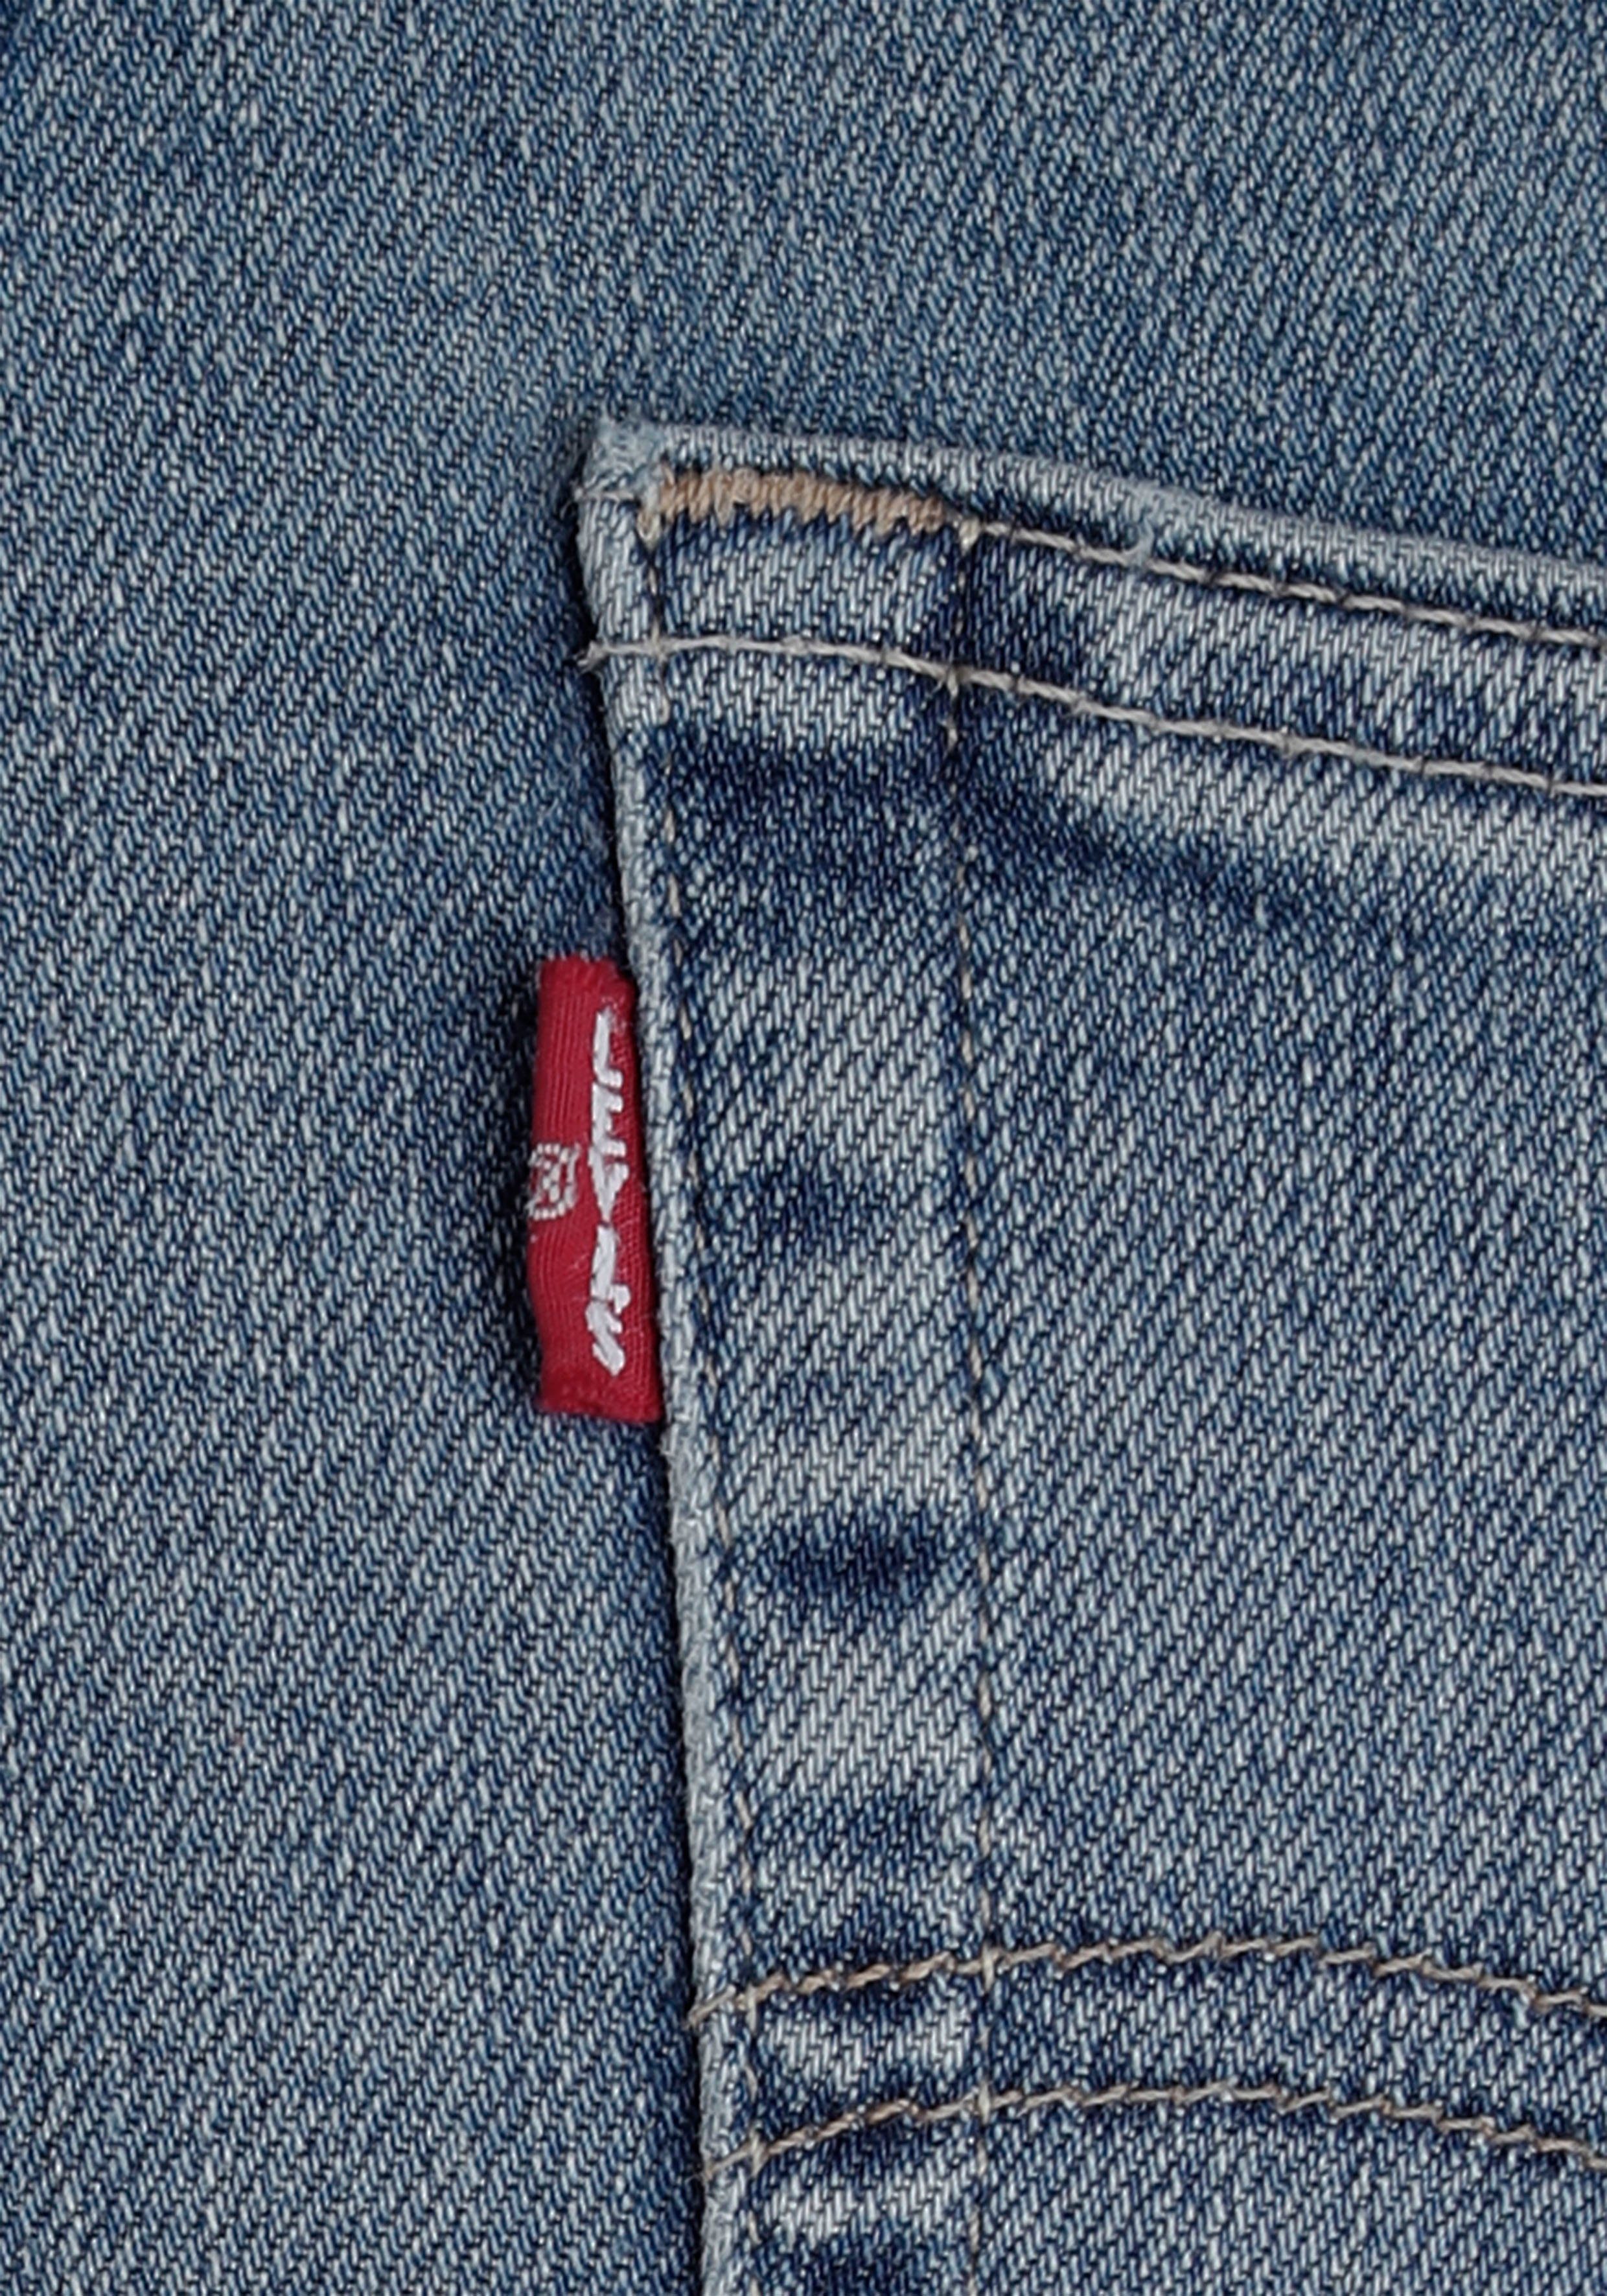 Levi's® Skinny-fit-Jeans 721 Bund High hohem rise used-denim mit skinny blue